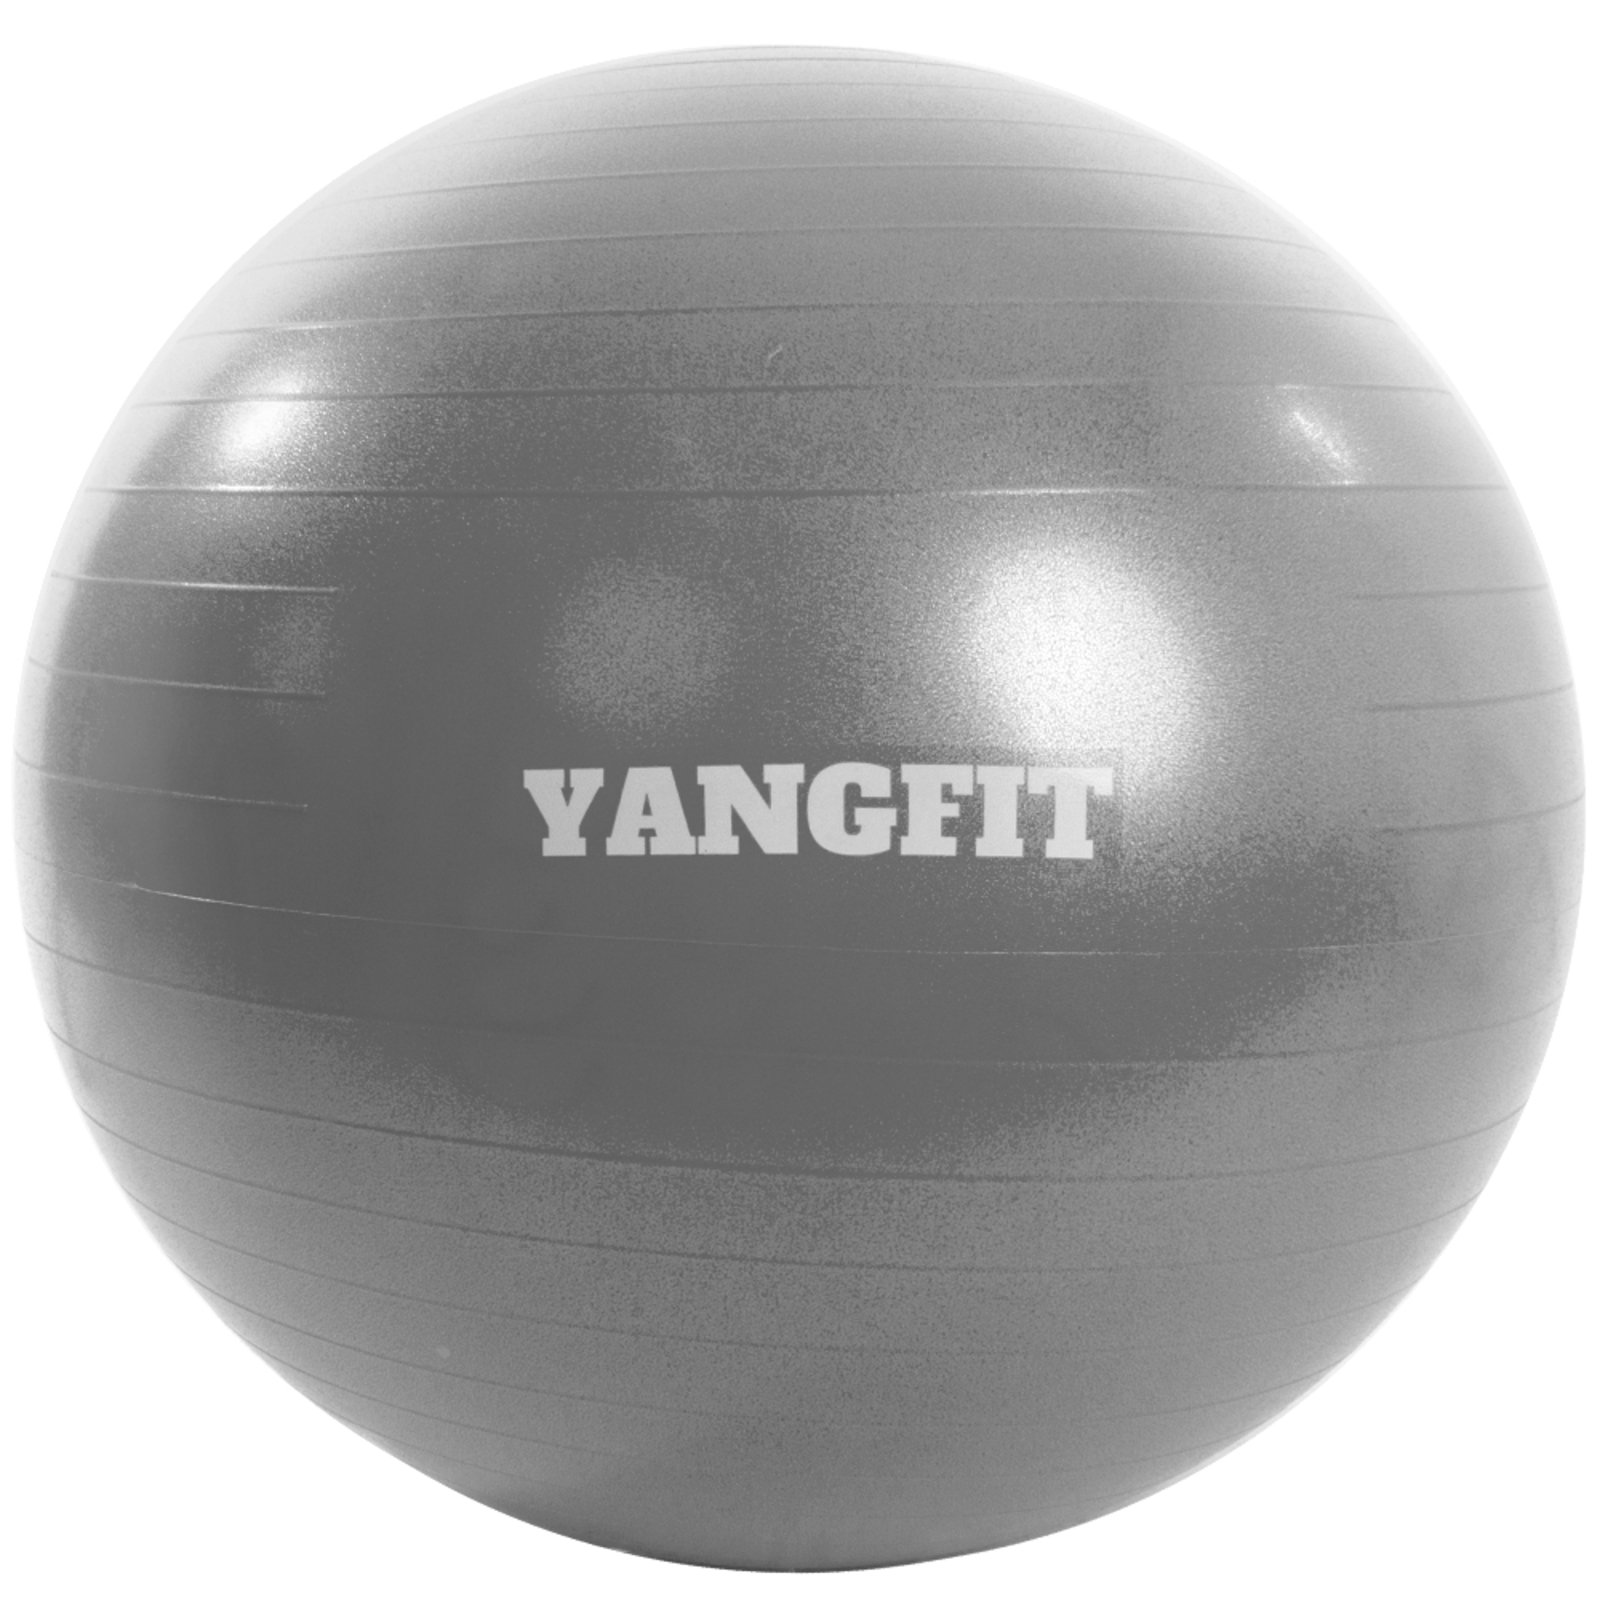 Bola Pilates Suica Exercicios Yoga Yangfit 65cm Com Bomba Compre Agora Dafiti Brasil